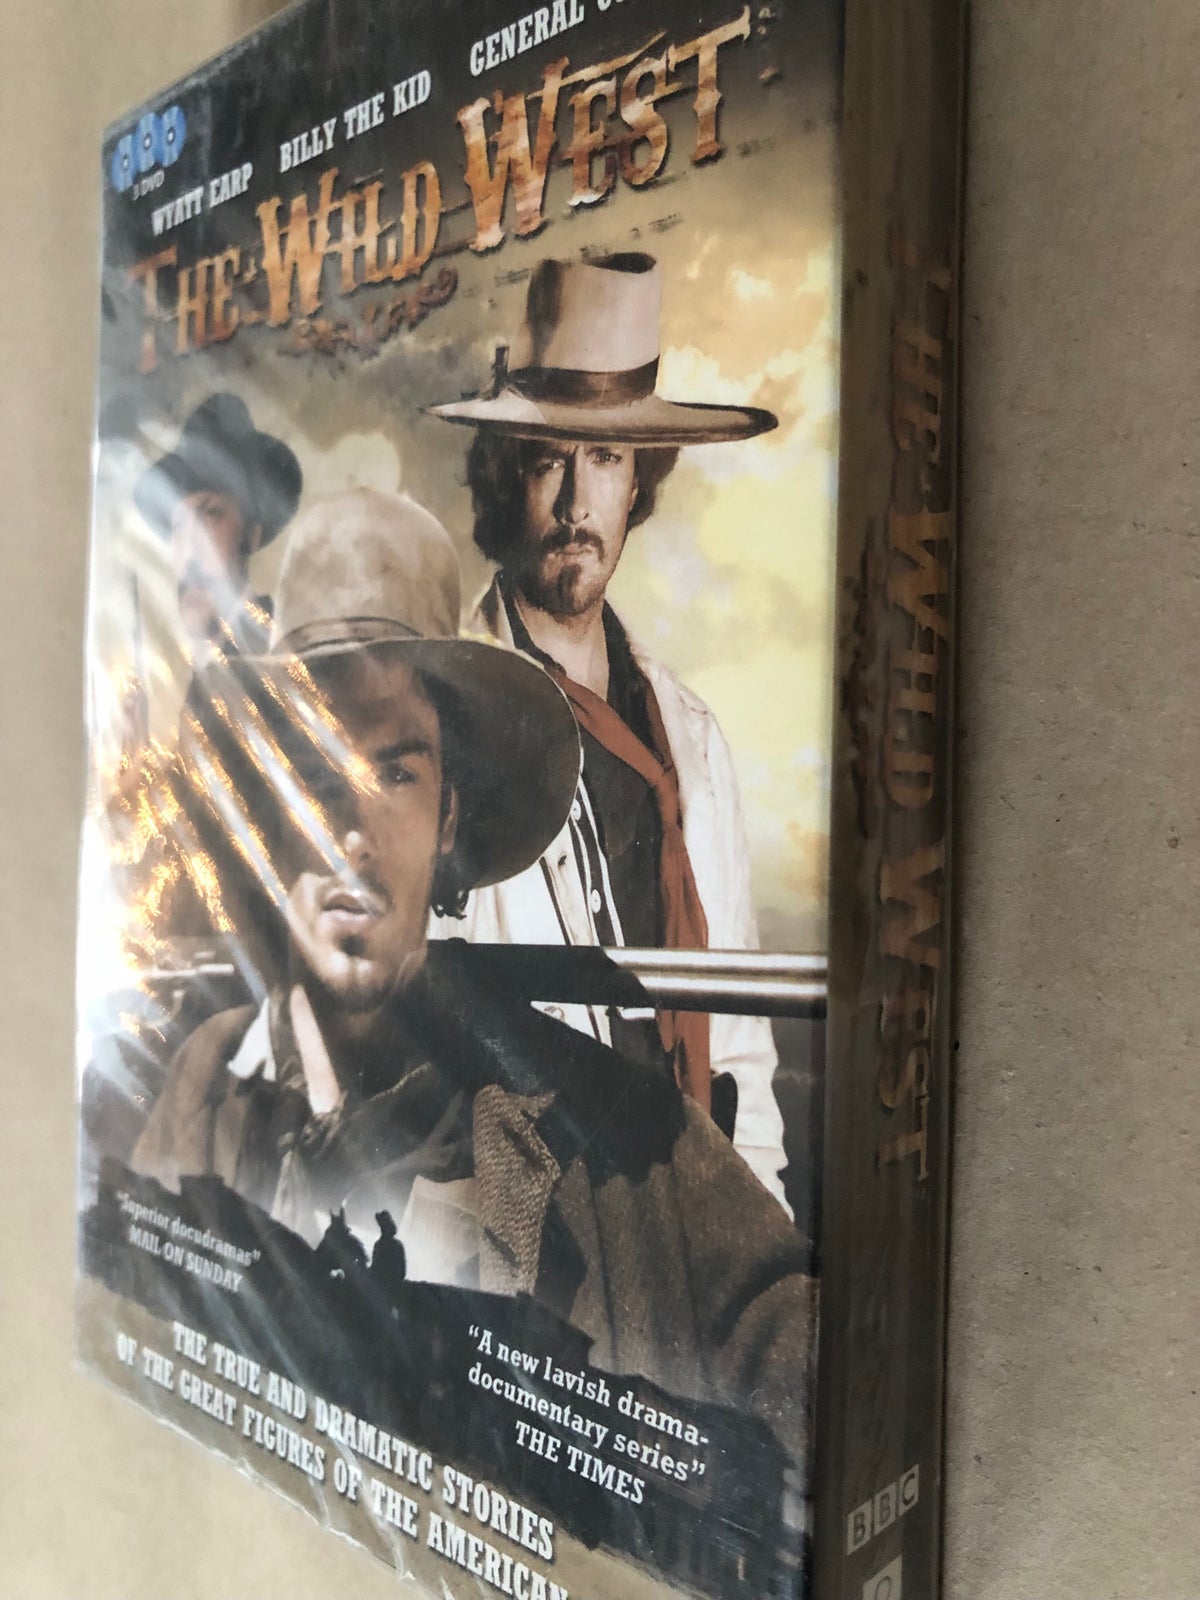 (NY) The Wild West, DVD, western